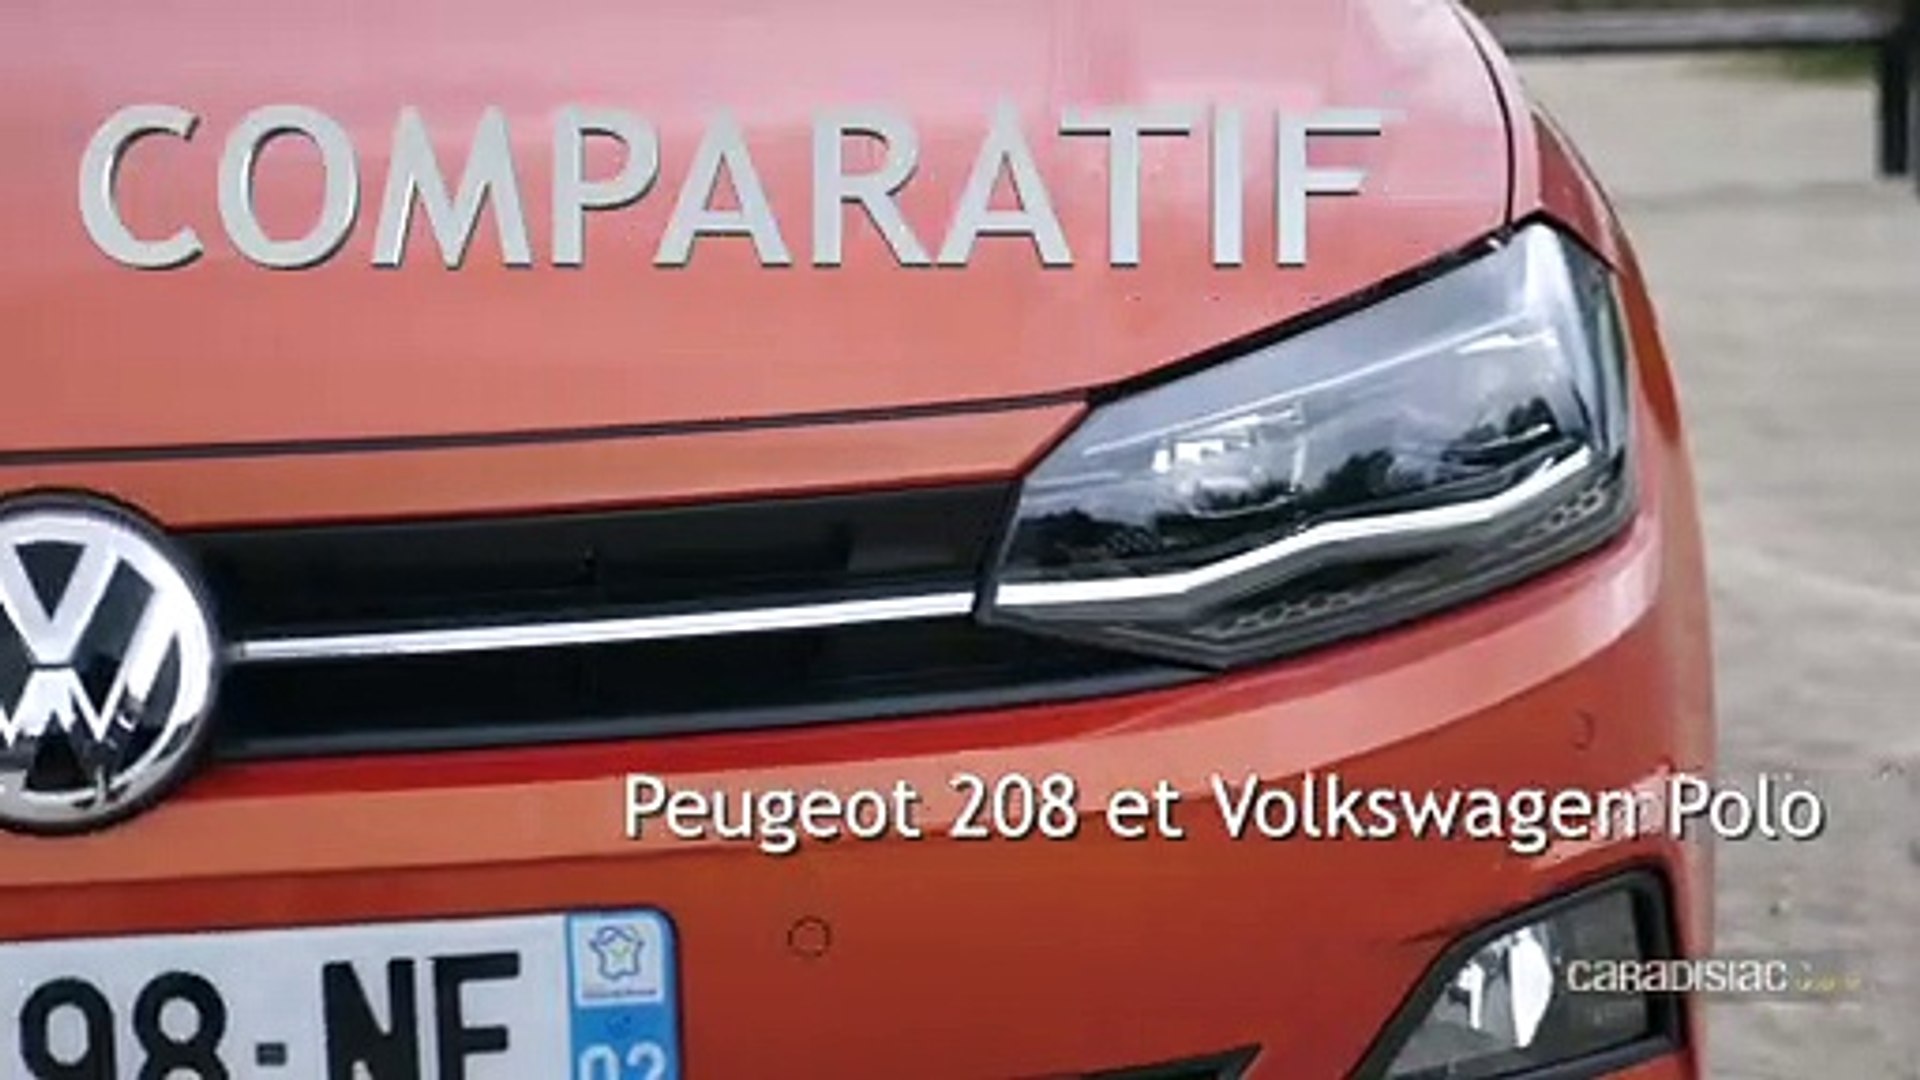 Comparatif - Peugeot 208 vs Volkswagen Polo - Vidéo Dailymotion